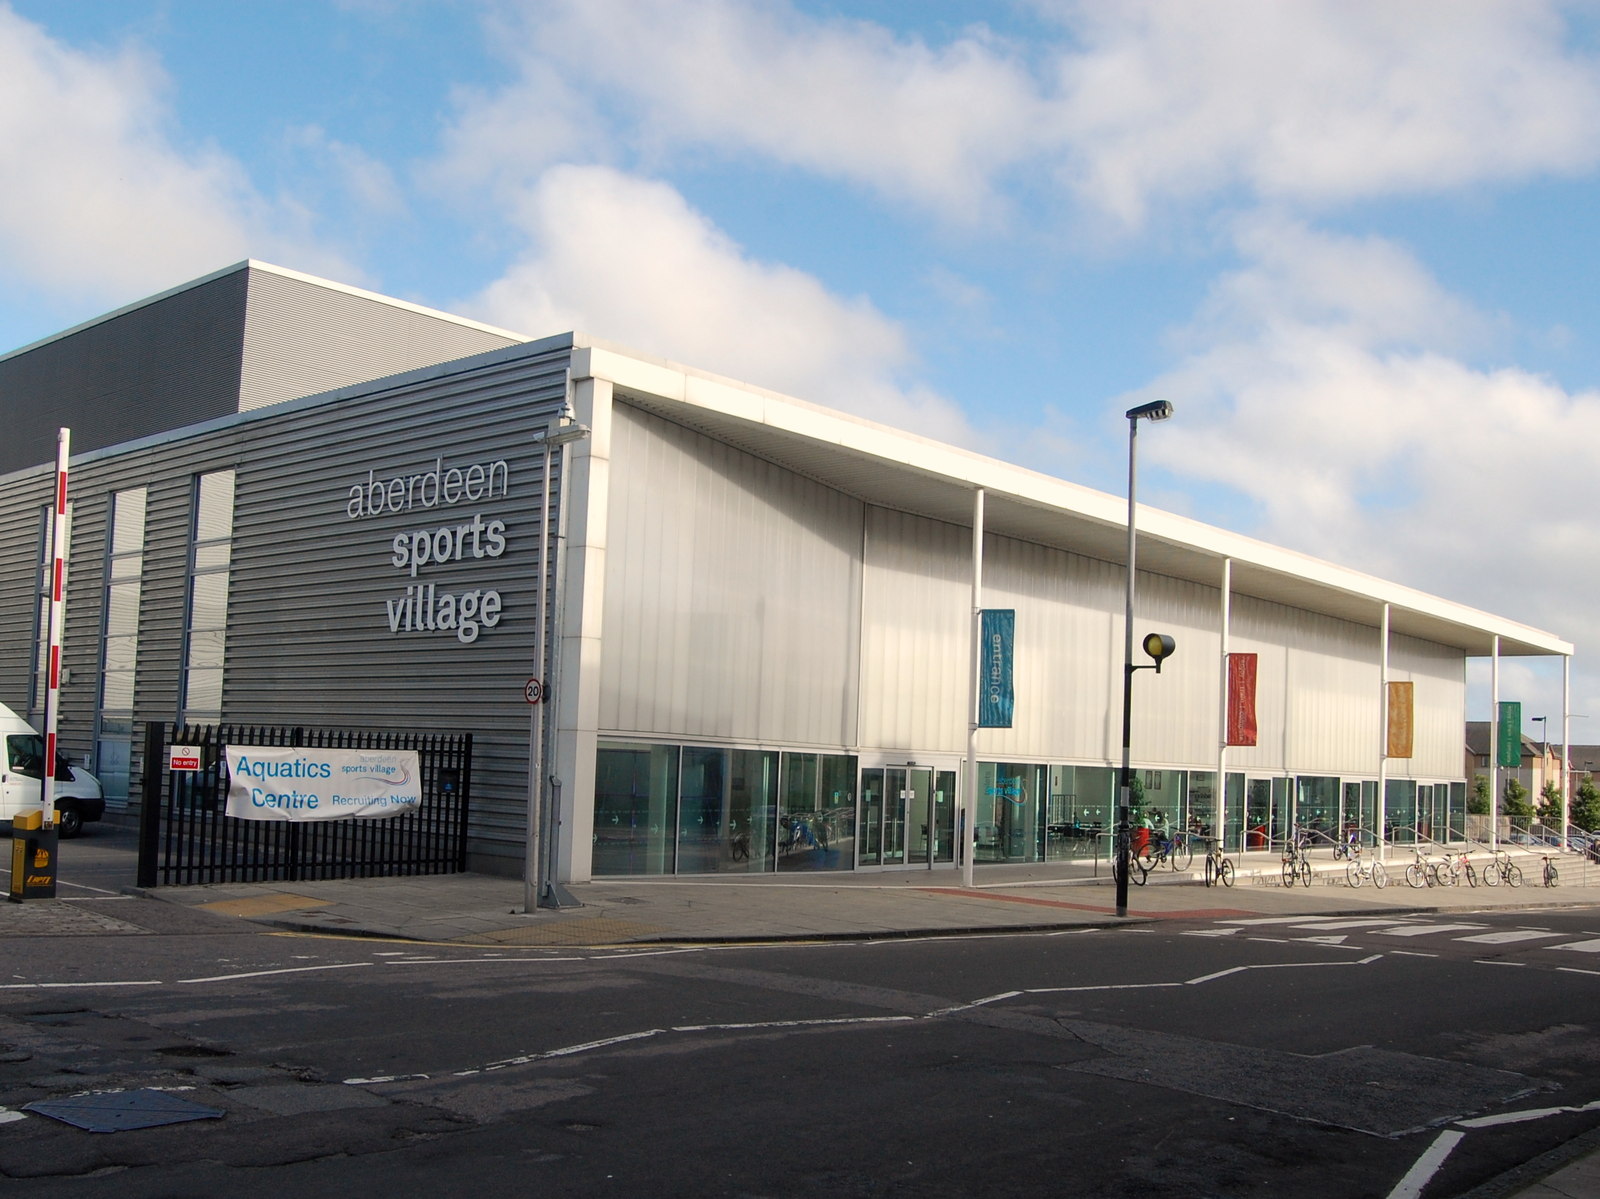 Aberdeen Sports Village - Wikipedia